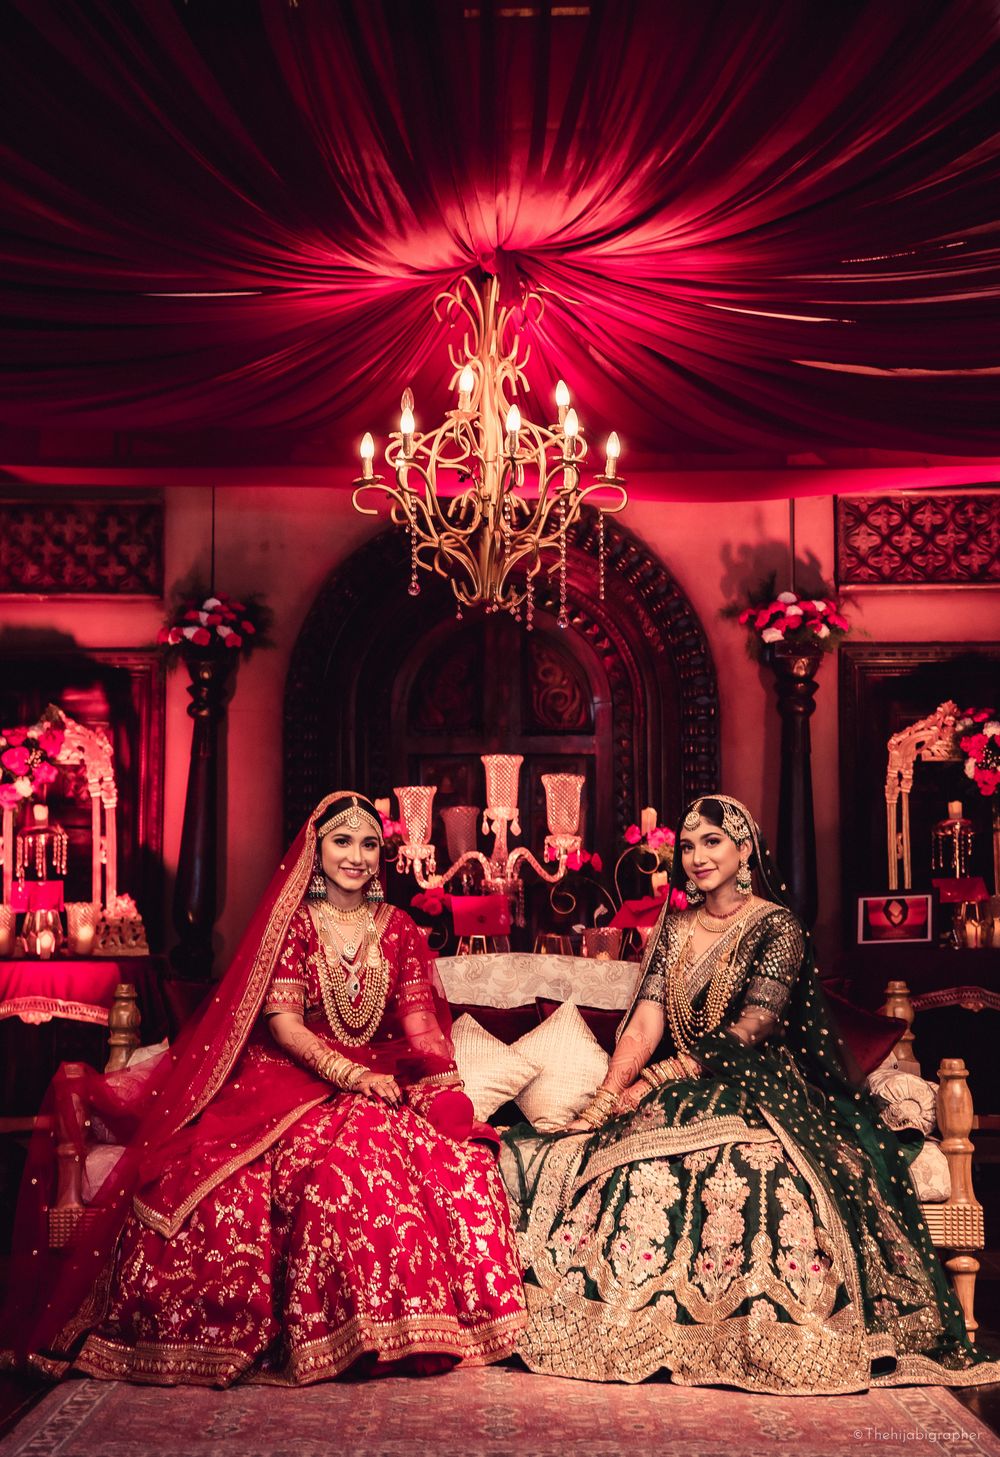 Photo From Mangalore Royal Twin brides - Sana & Suha's Wedding - By Thehijabigrapher